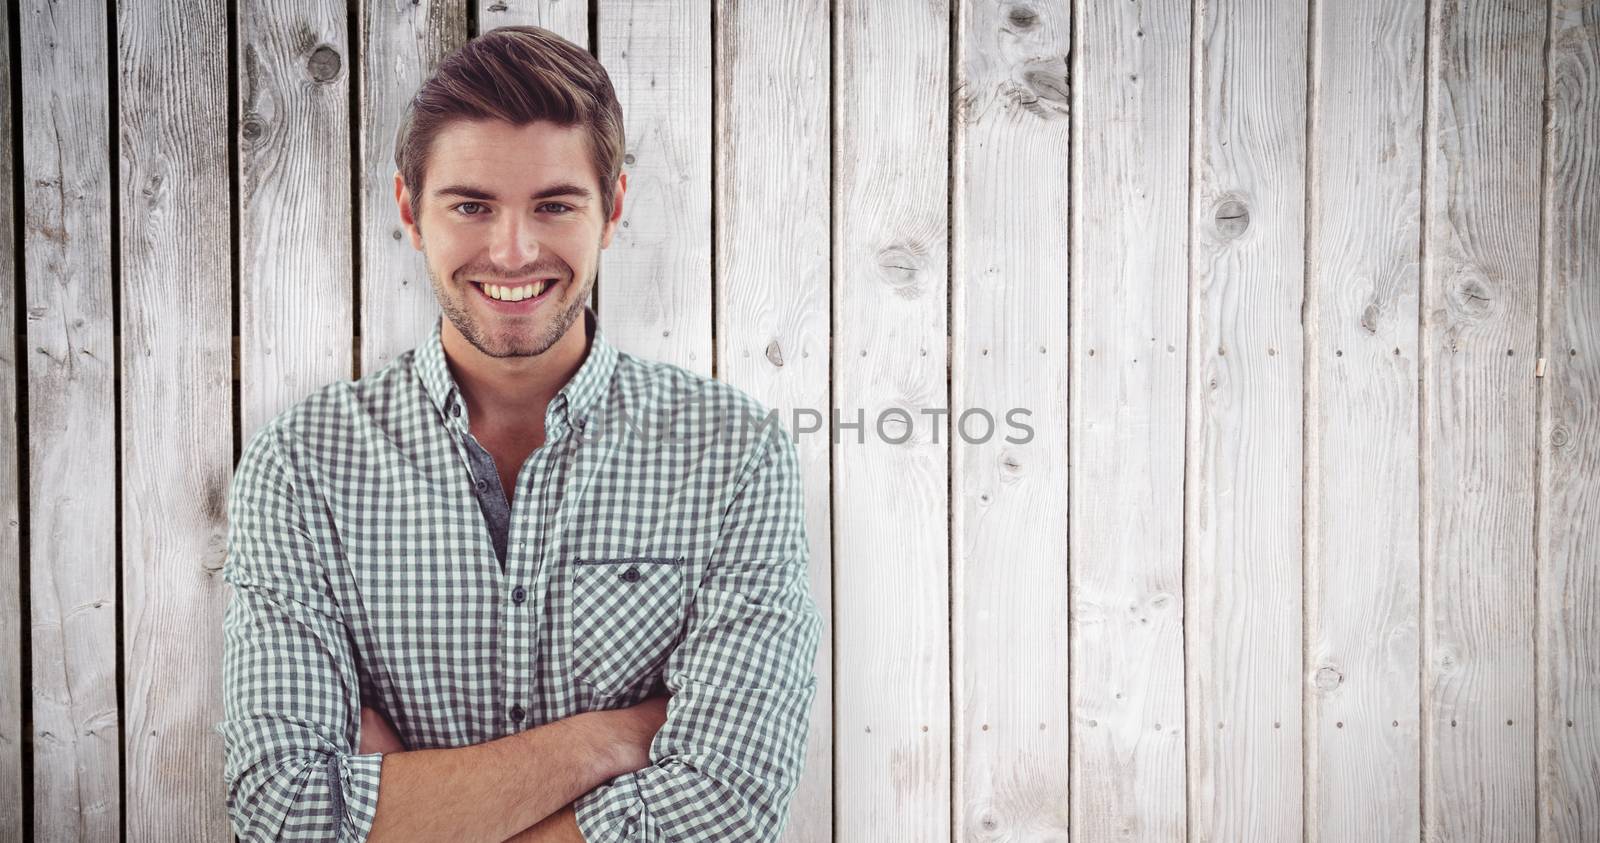 Smiling crestive business man against wooden planks